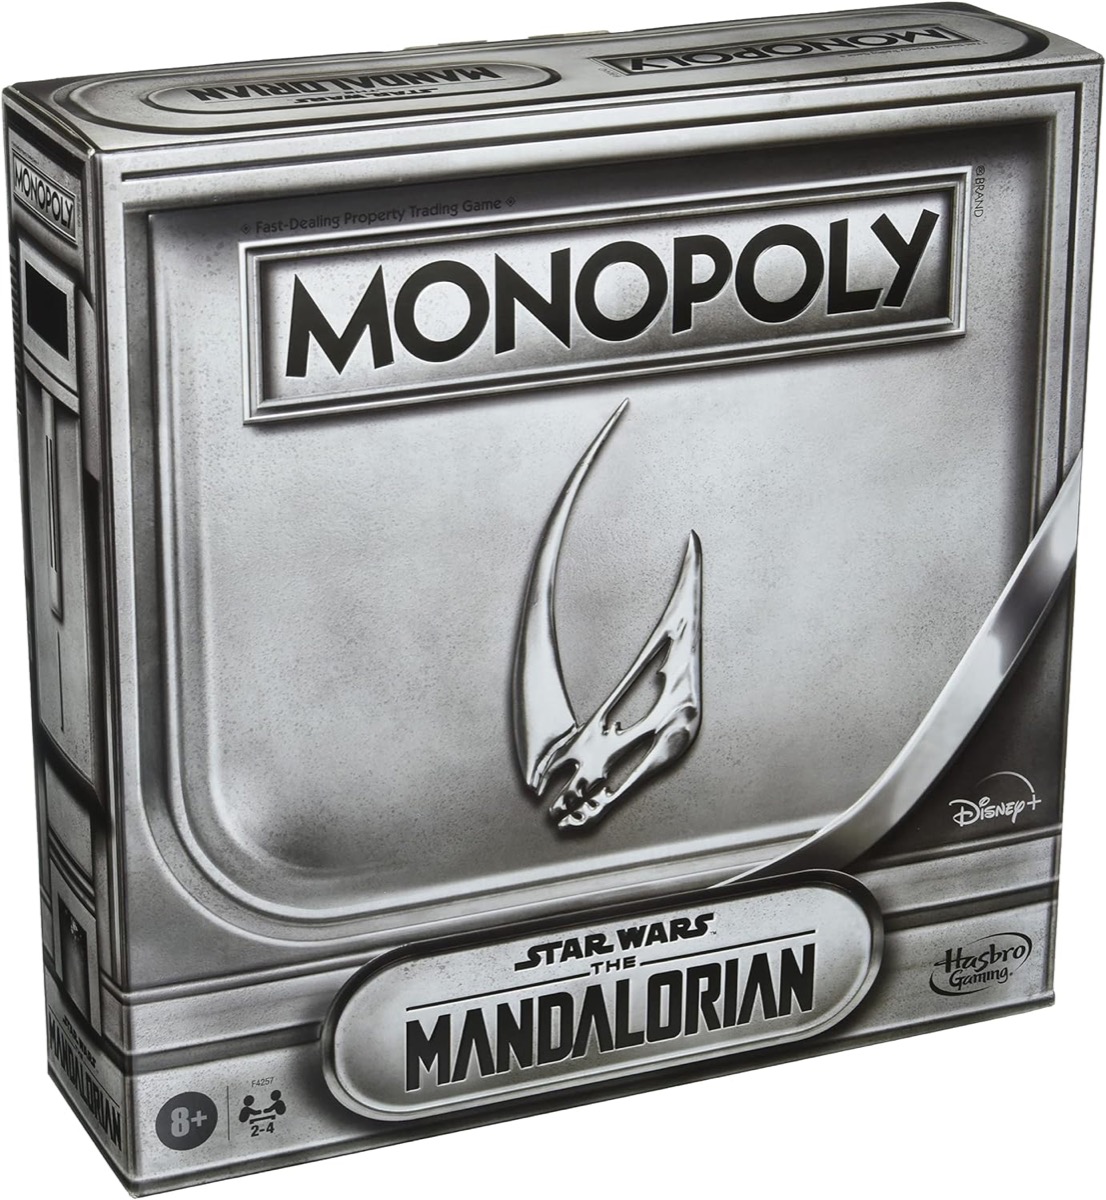 Box art for Monopoly- Star Wars The Mandalorian Edition featuring a Mandalorian symbol 